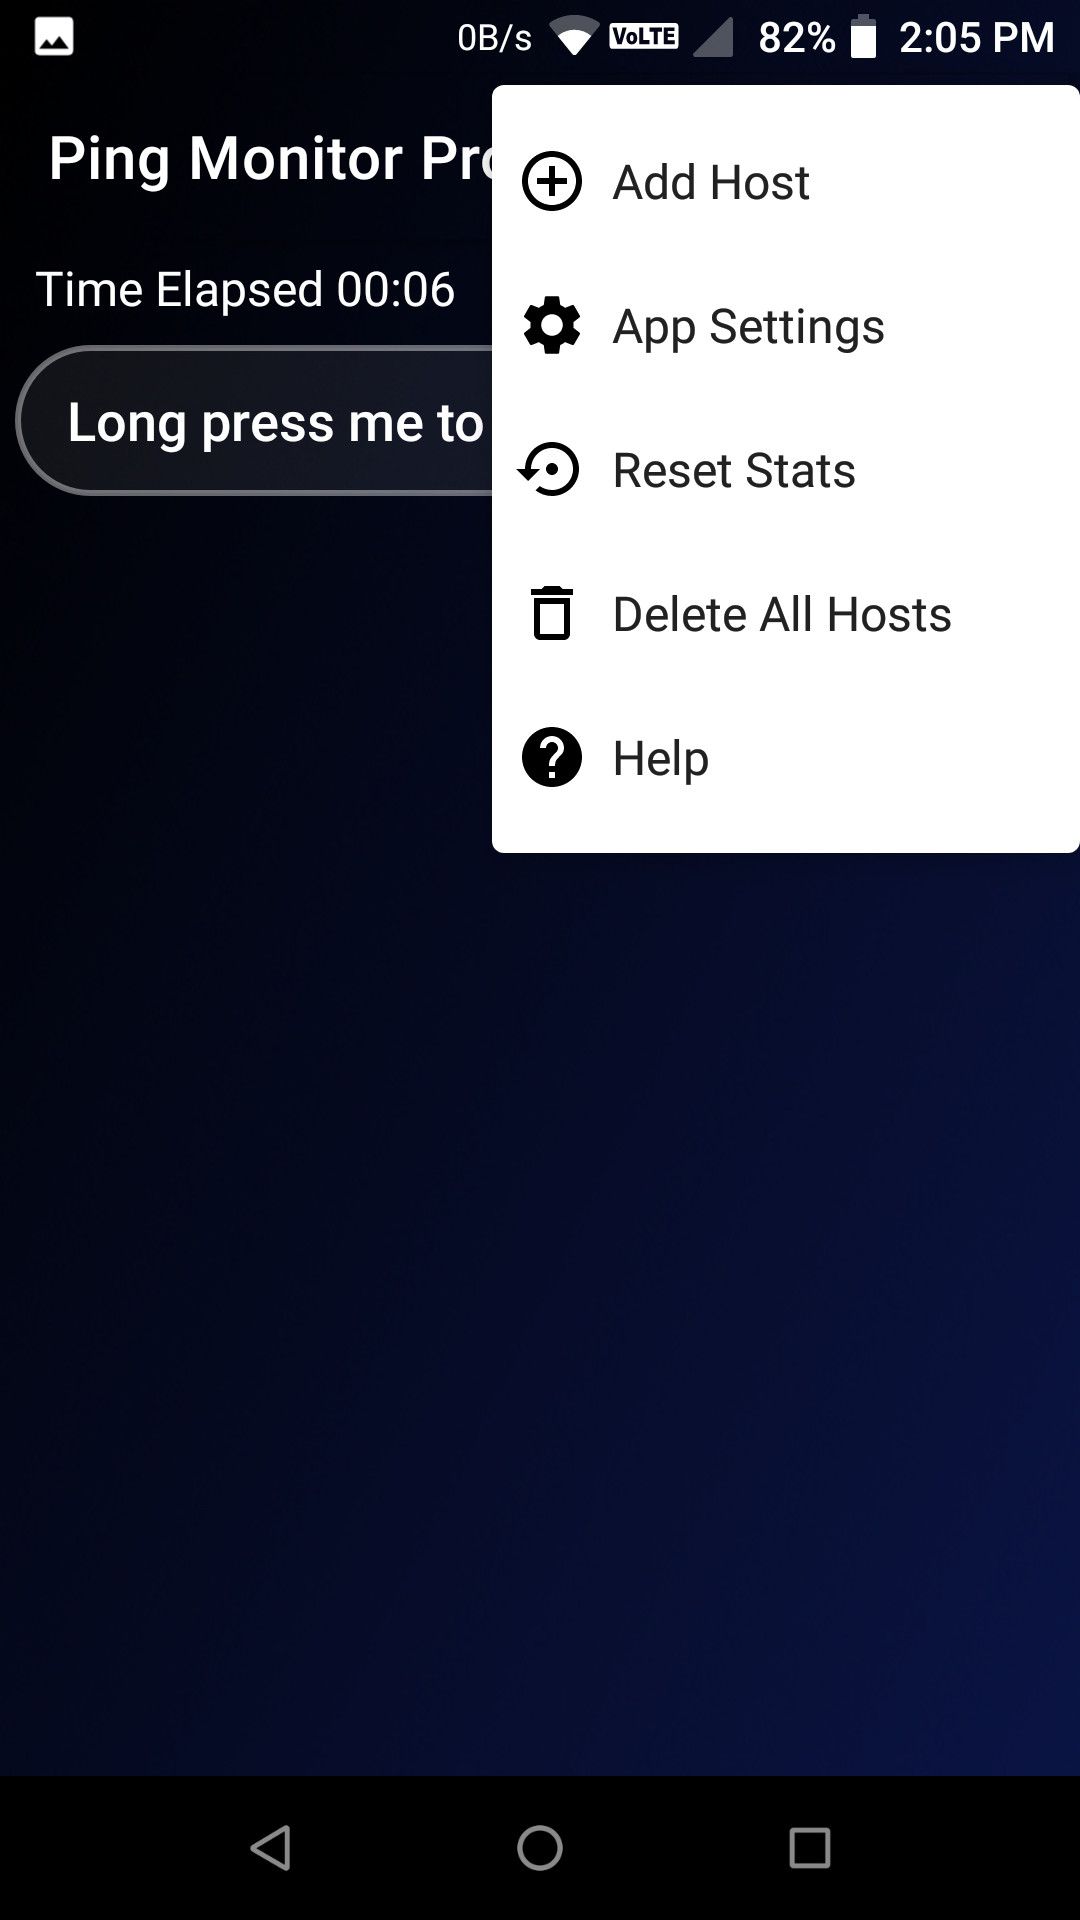 Add host in ping monitor pro app